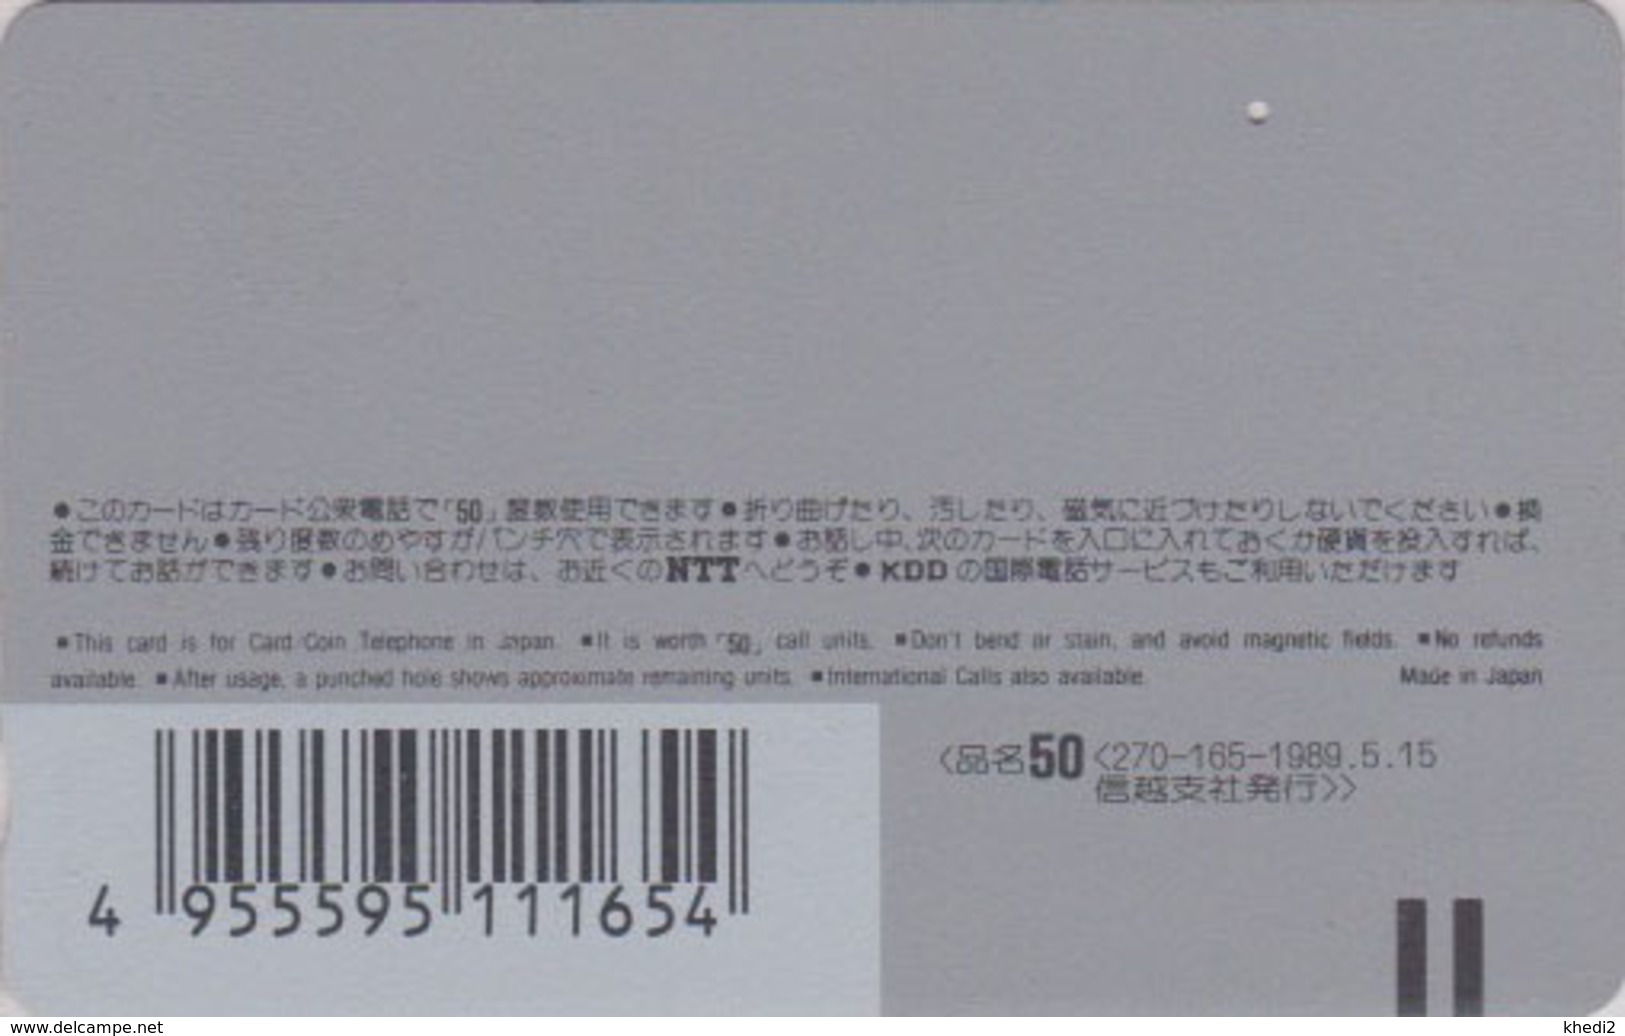 Télécarte Japon / NTT 270-165 A ** ONE PUNCH ** - Animal - OISEAU Fauvette Japonaise - ZOSTEROPS BIRD Japan Phonecard - Songbirds & Tree Dwellers